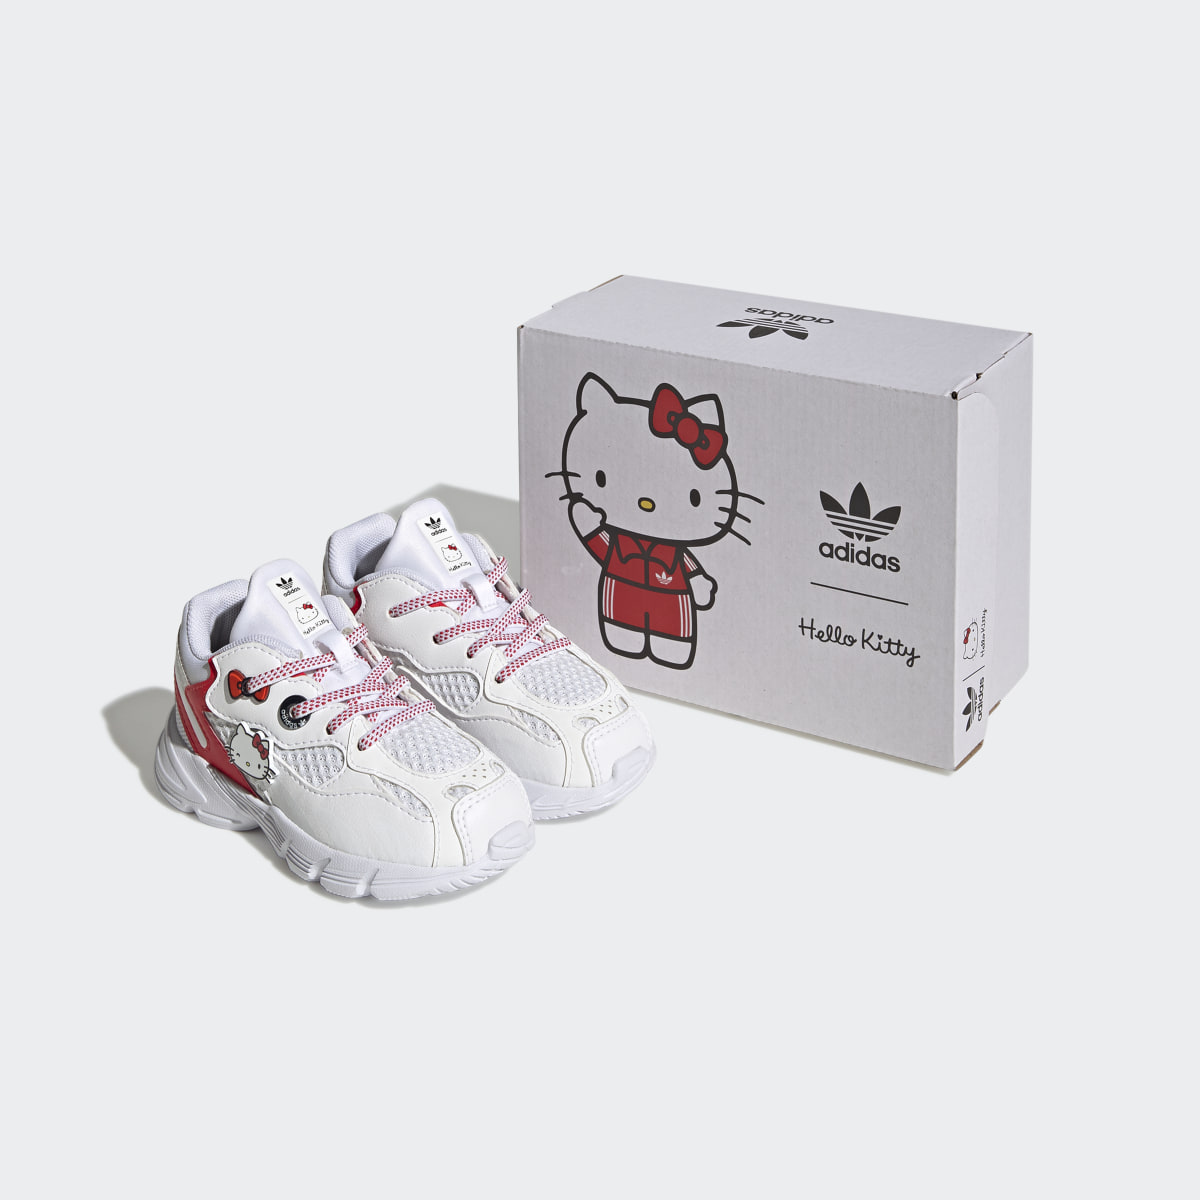 Adidas Hello Kitty Astir Schuh. 4